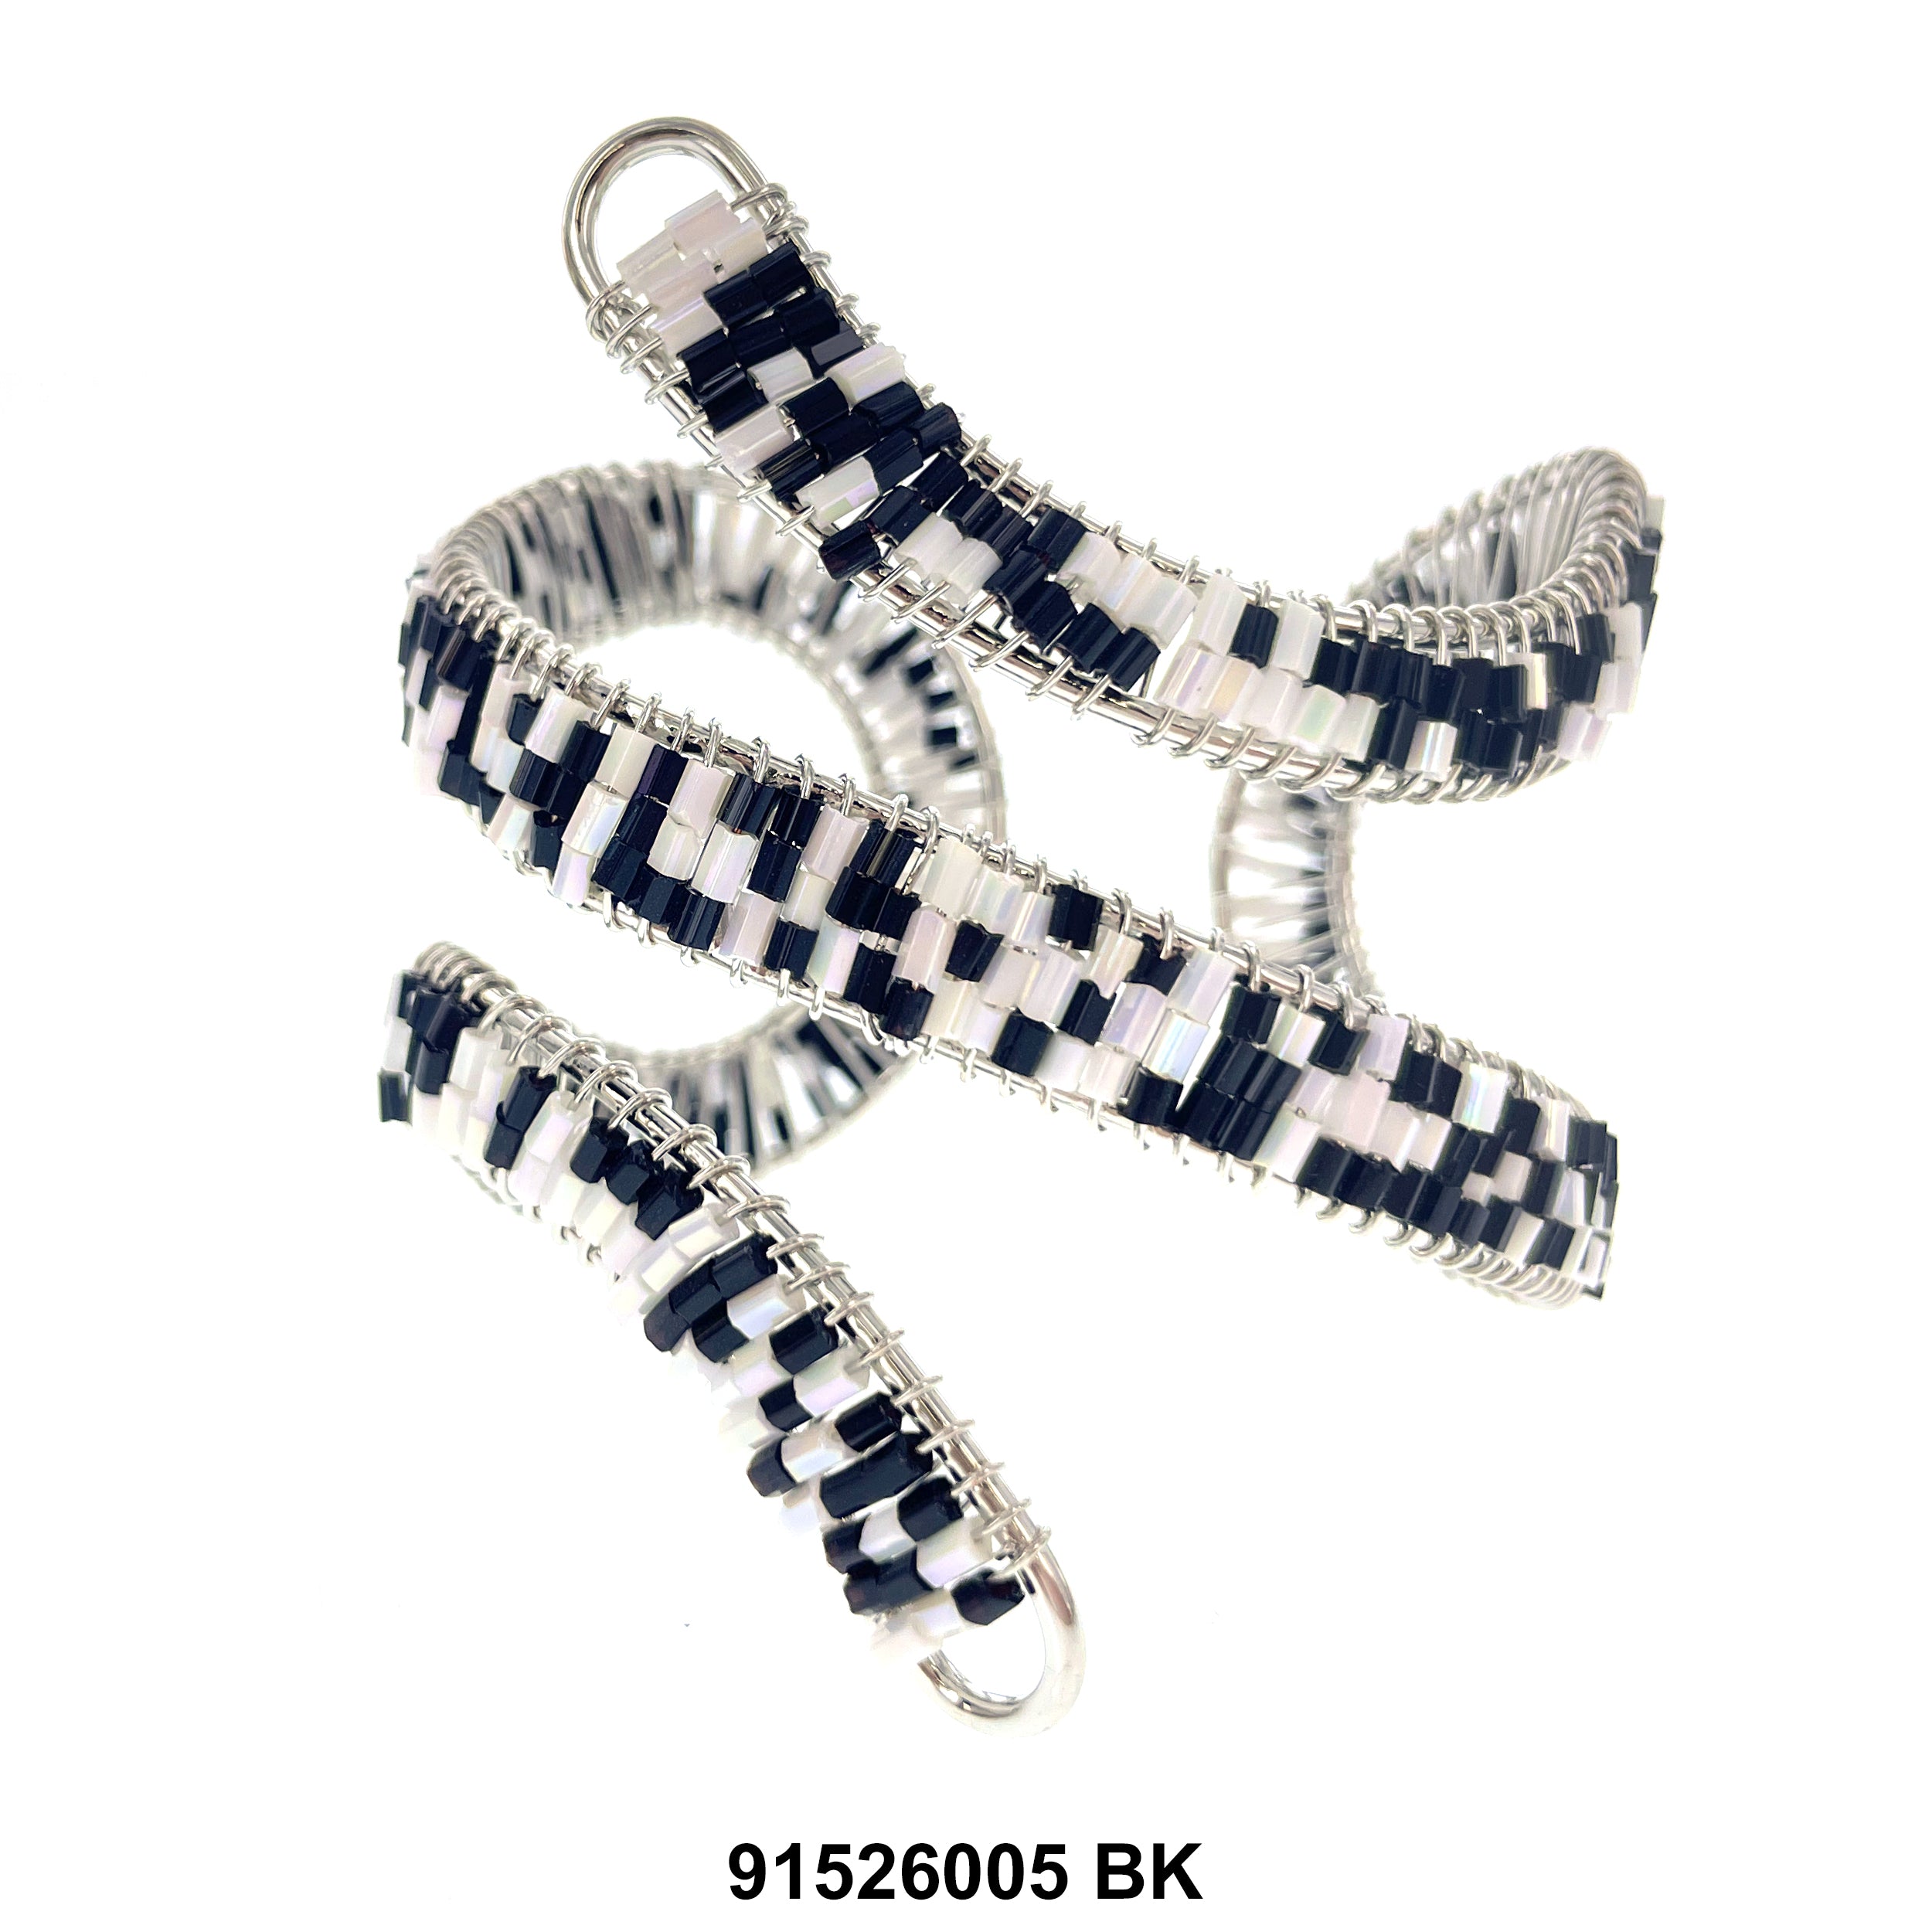 Cuff Bangle Bracelet 91526005 BK